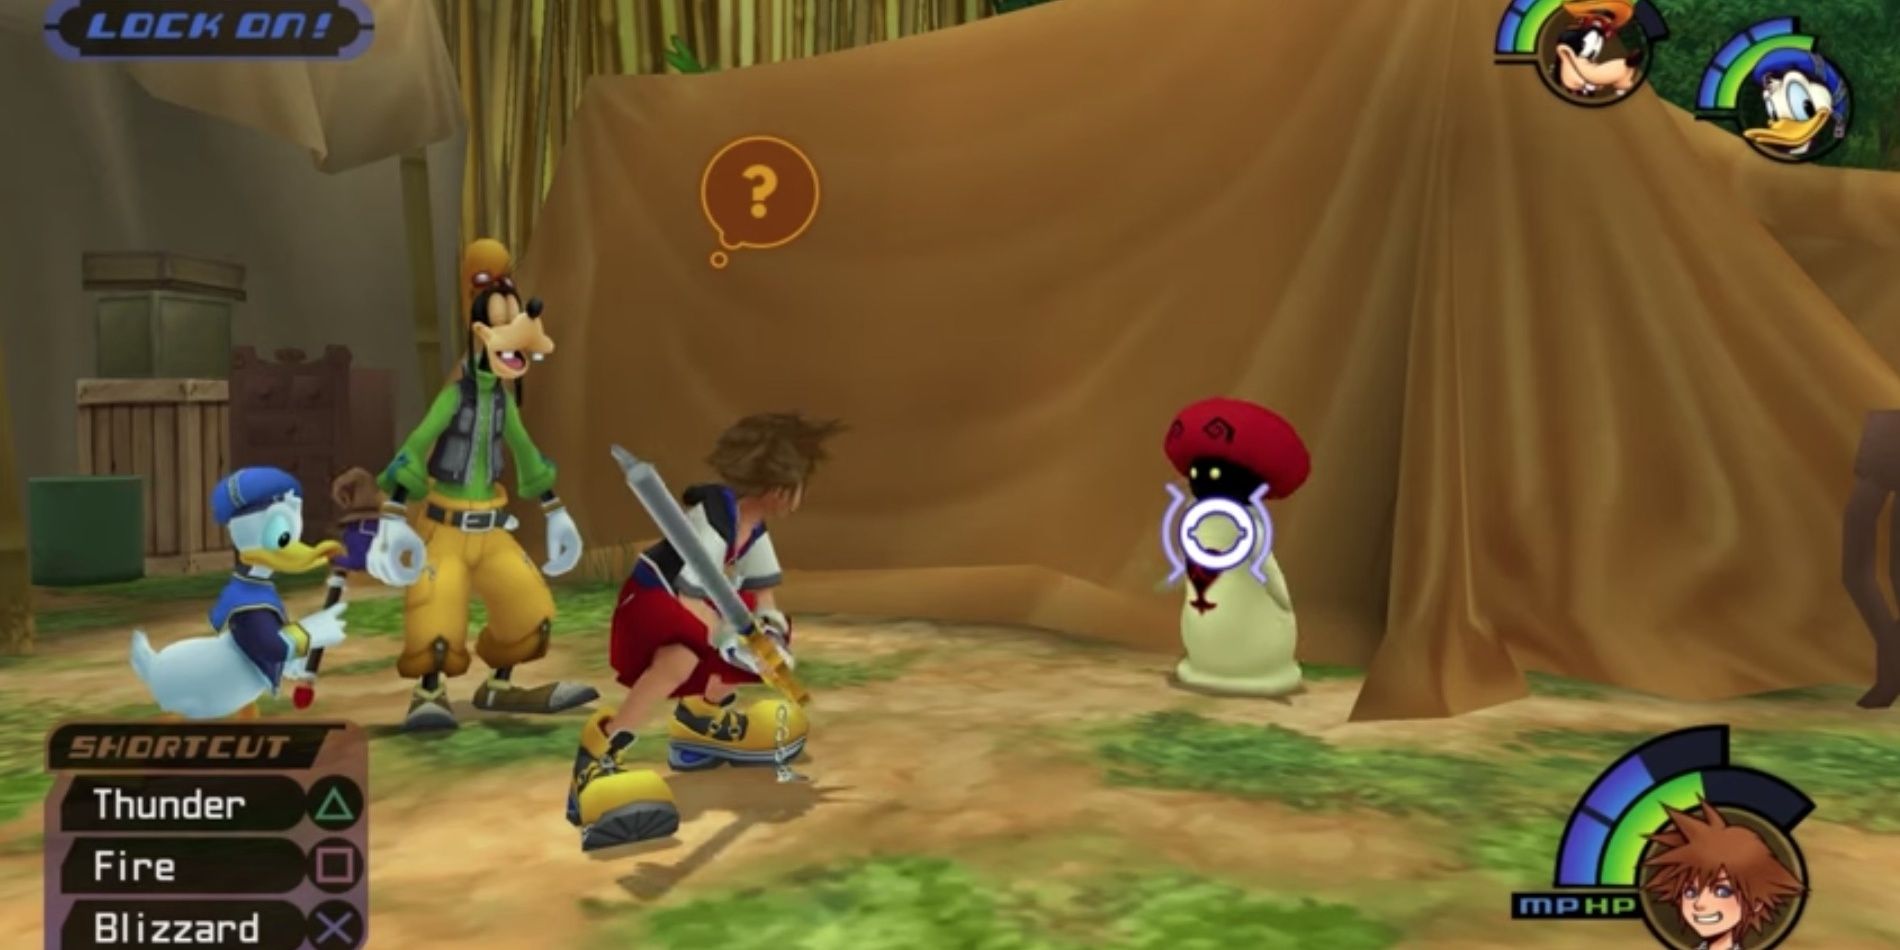 Sora locked onto a white mushroom in the campground in Deep Jungle, Tarzan's World